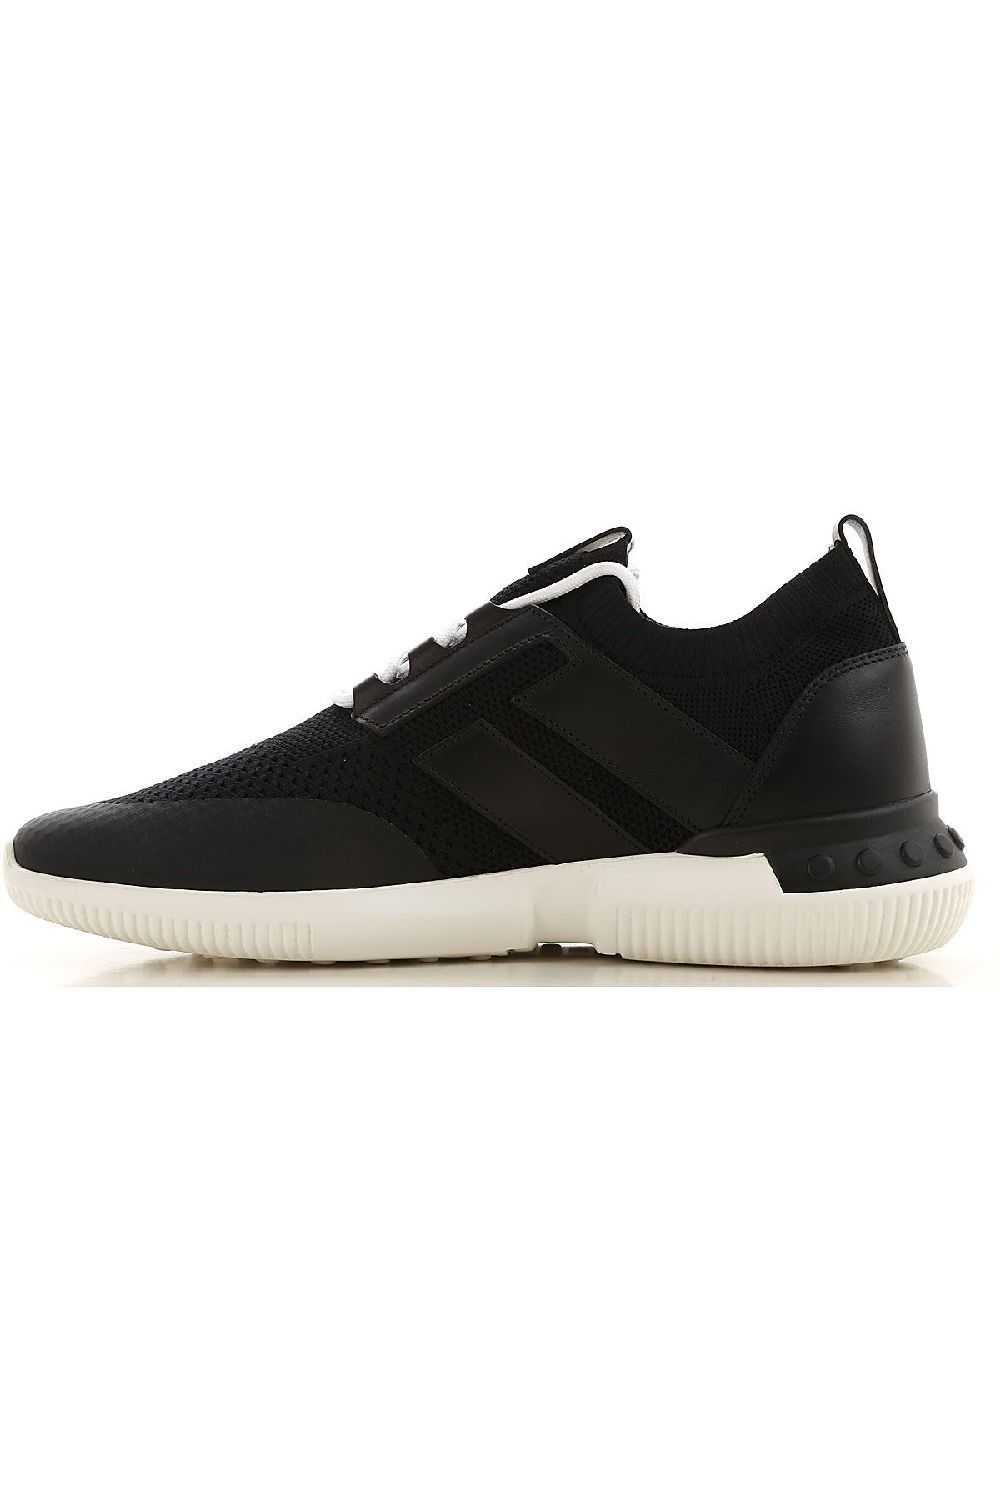 Tod's o1lxy1mk0524 Sneakers in Black & White - image 3